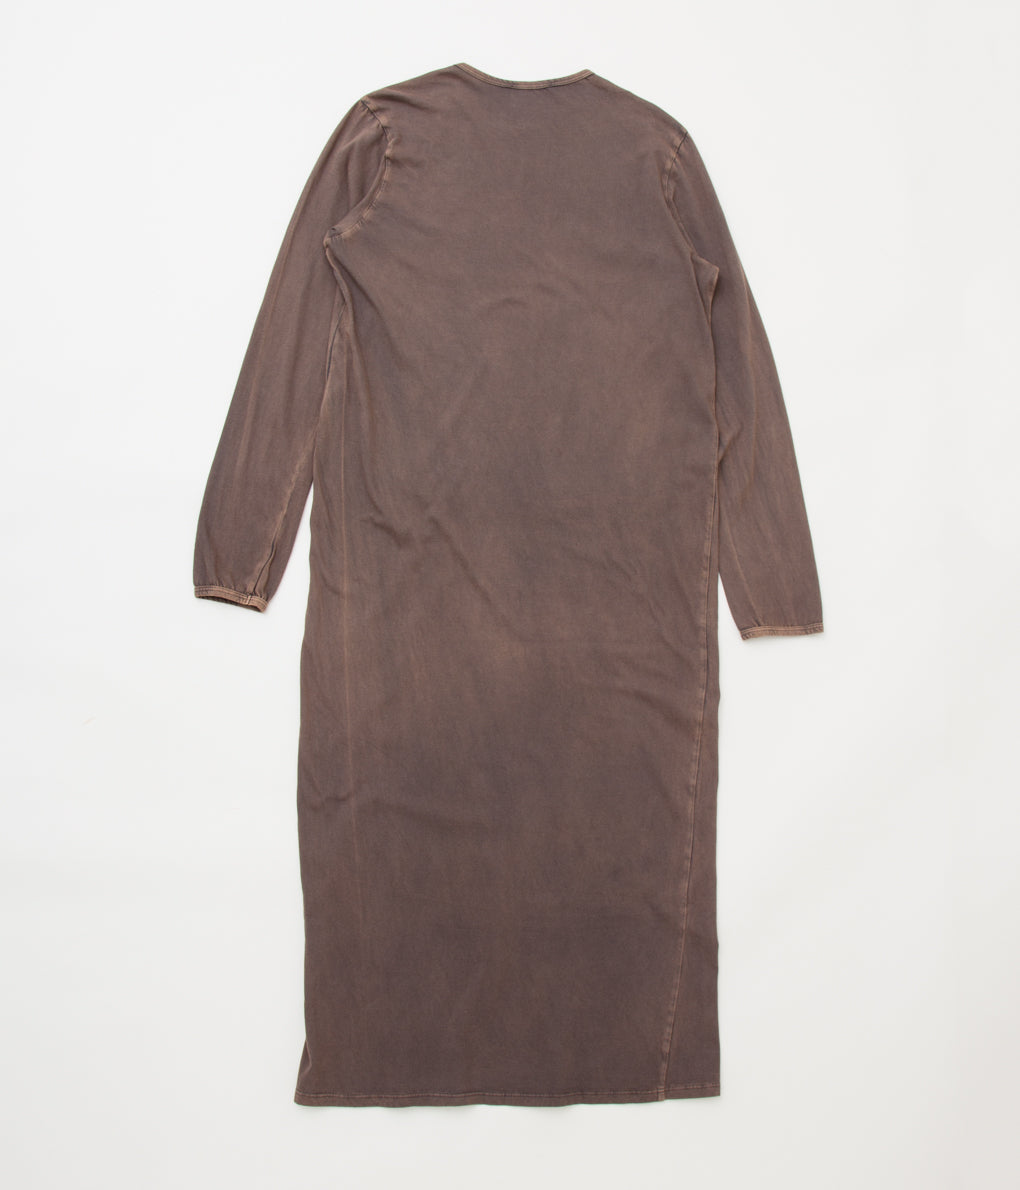 GABRIELA COLL GARMENTS "NO.154 LONG SLEEVE T-SHIRT DRESS" (BLACK SALT WASH)